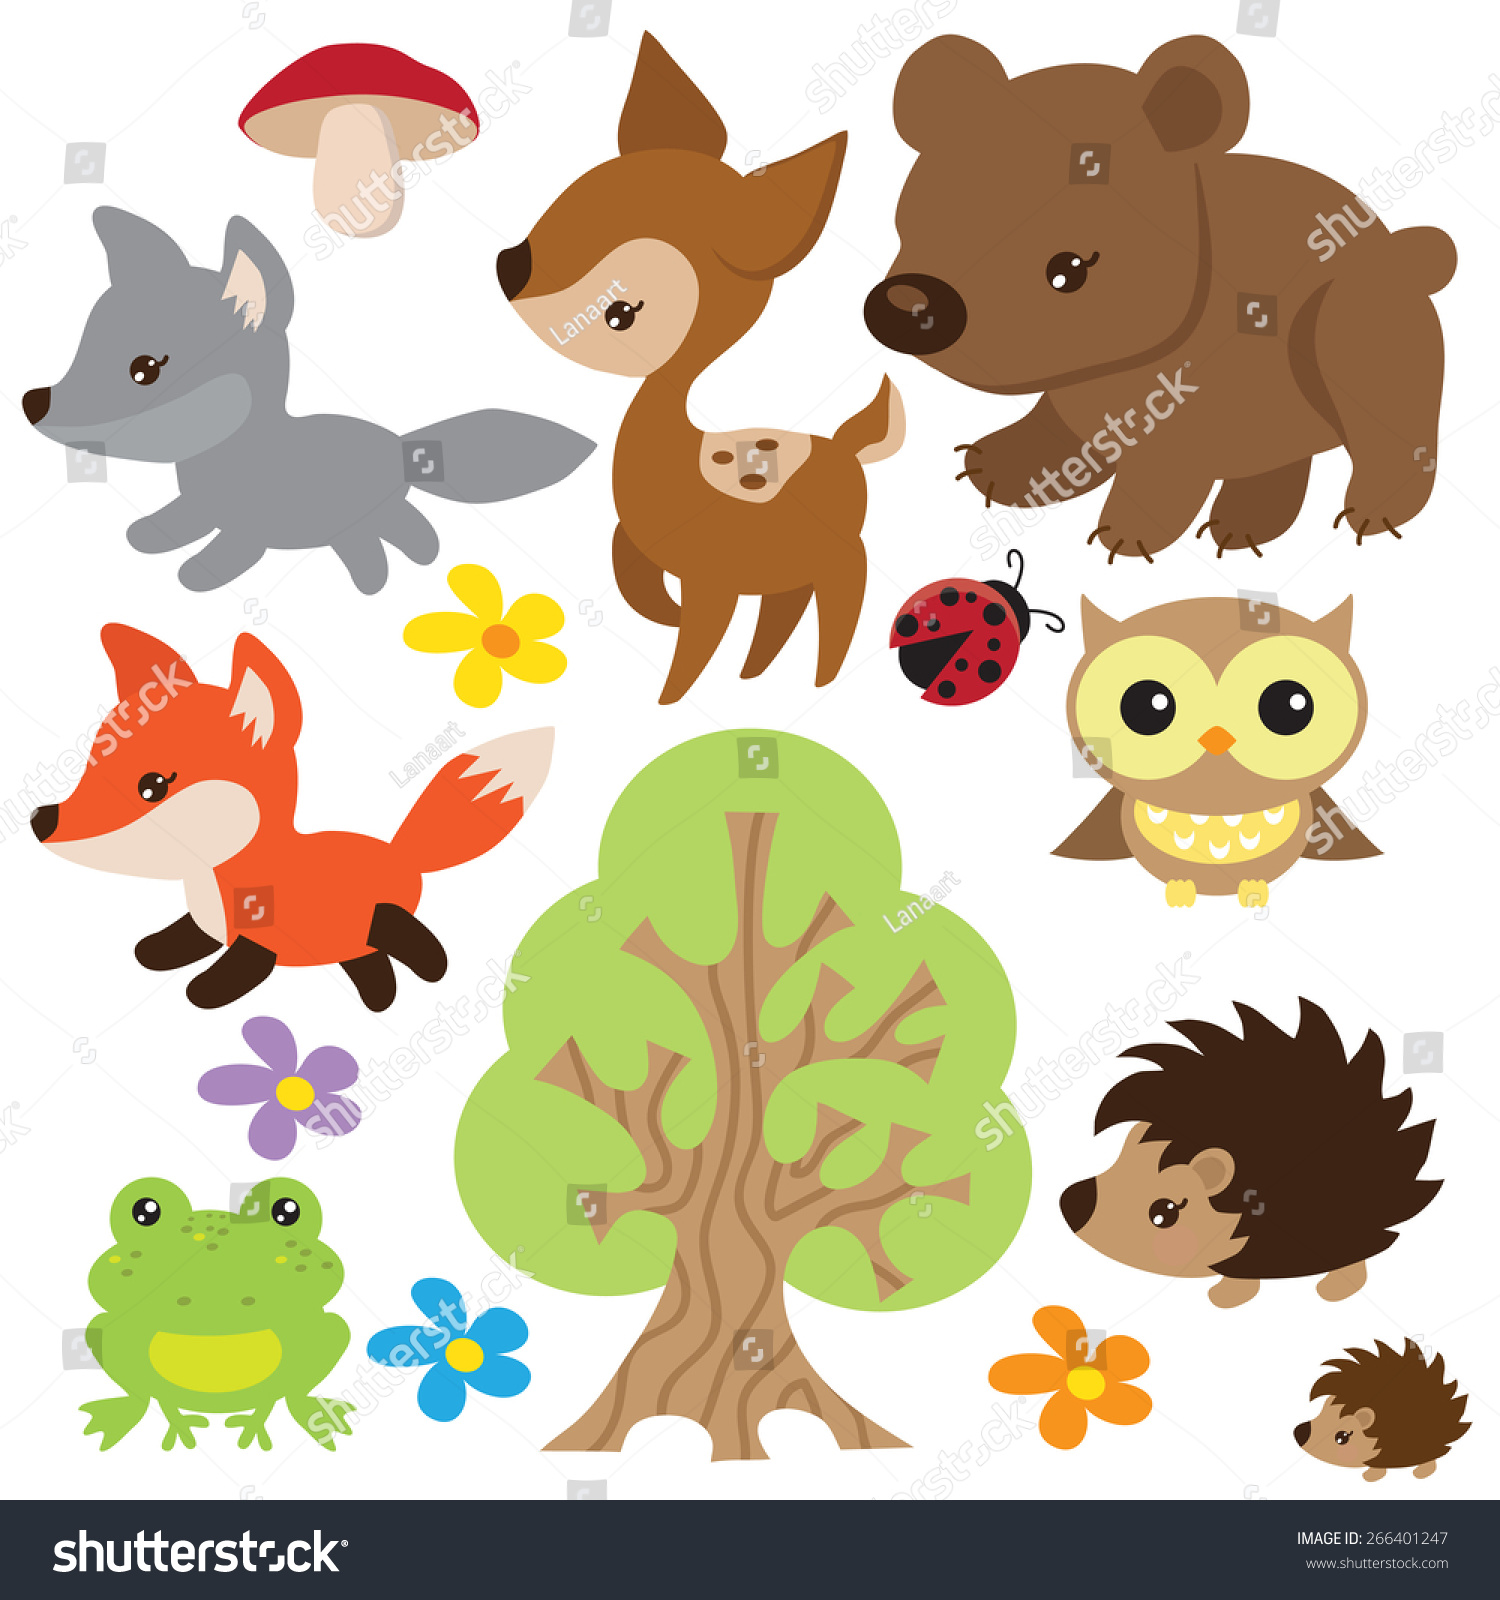 Forest Animal Vector Illustration - 266401247 : Shutterstock